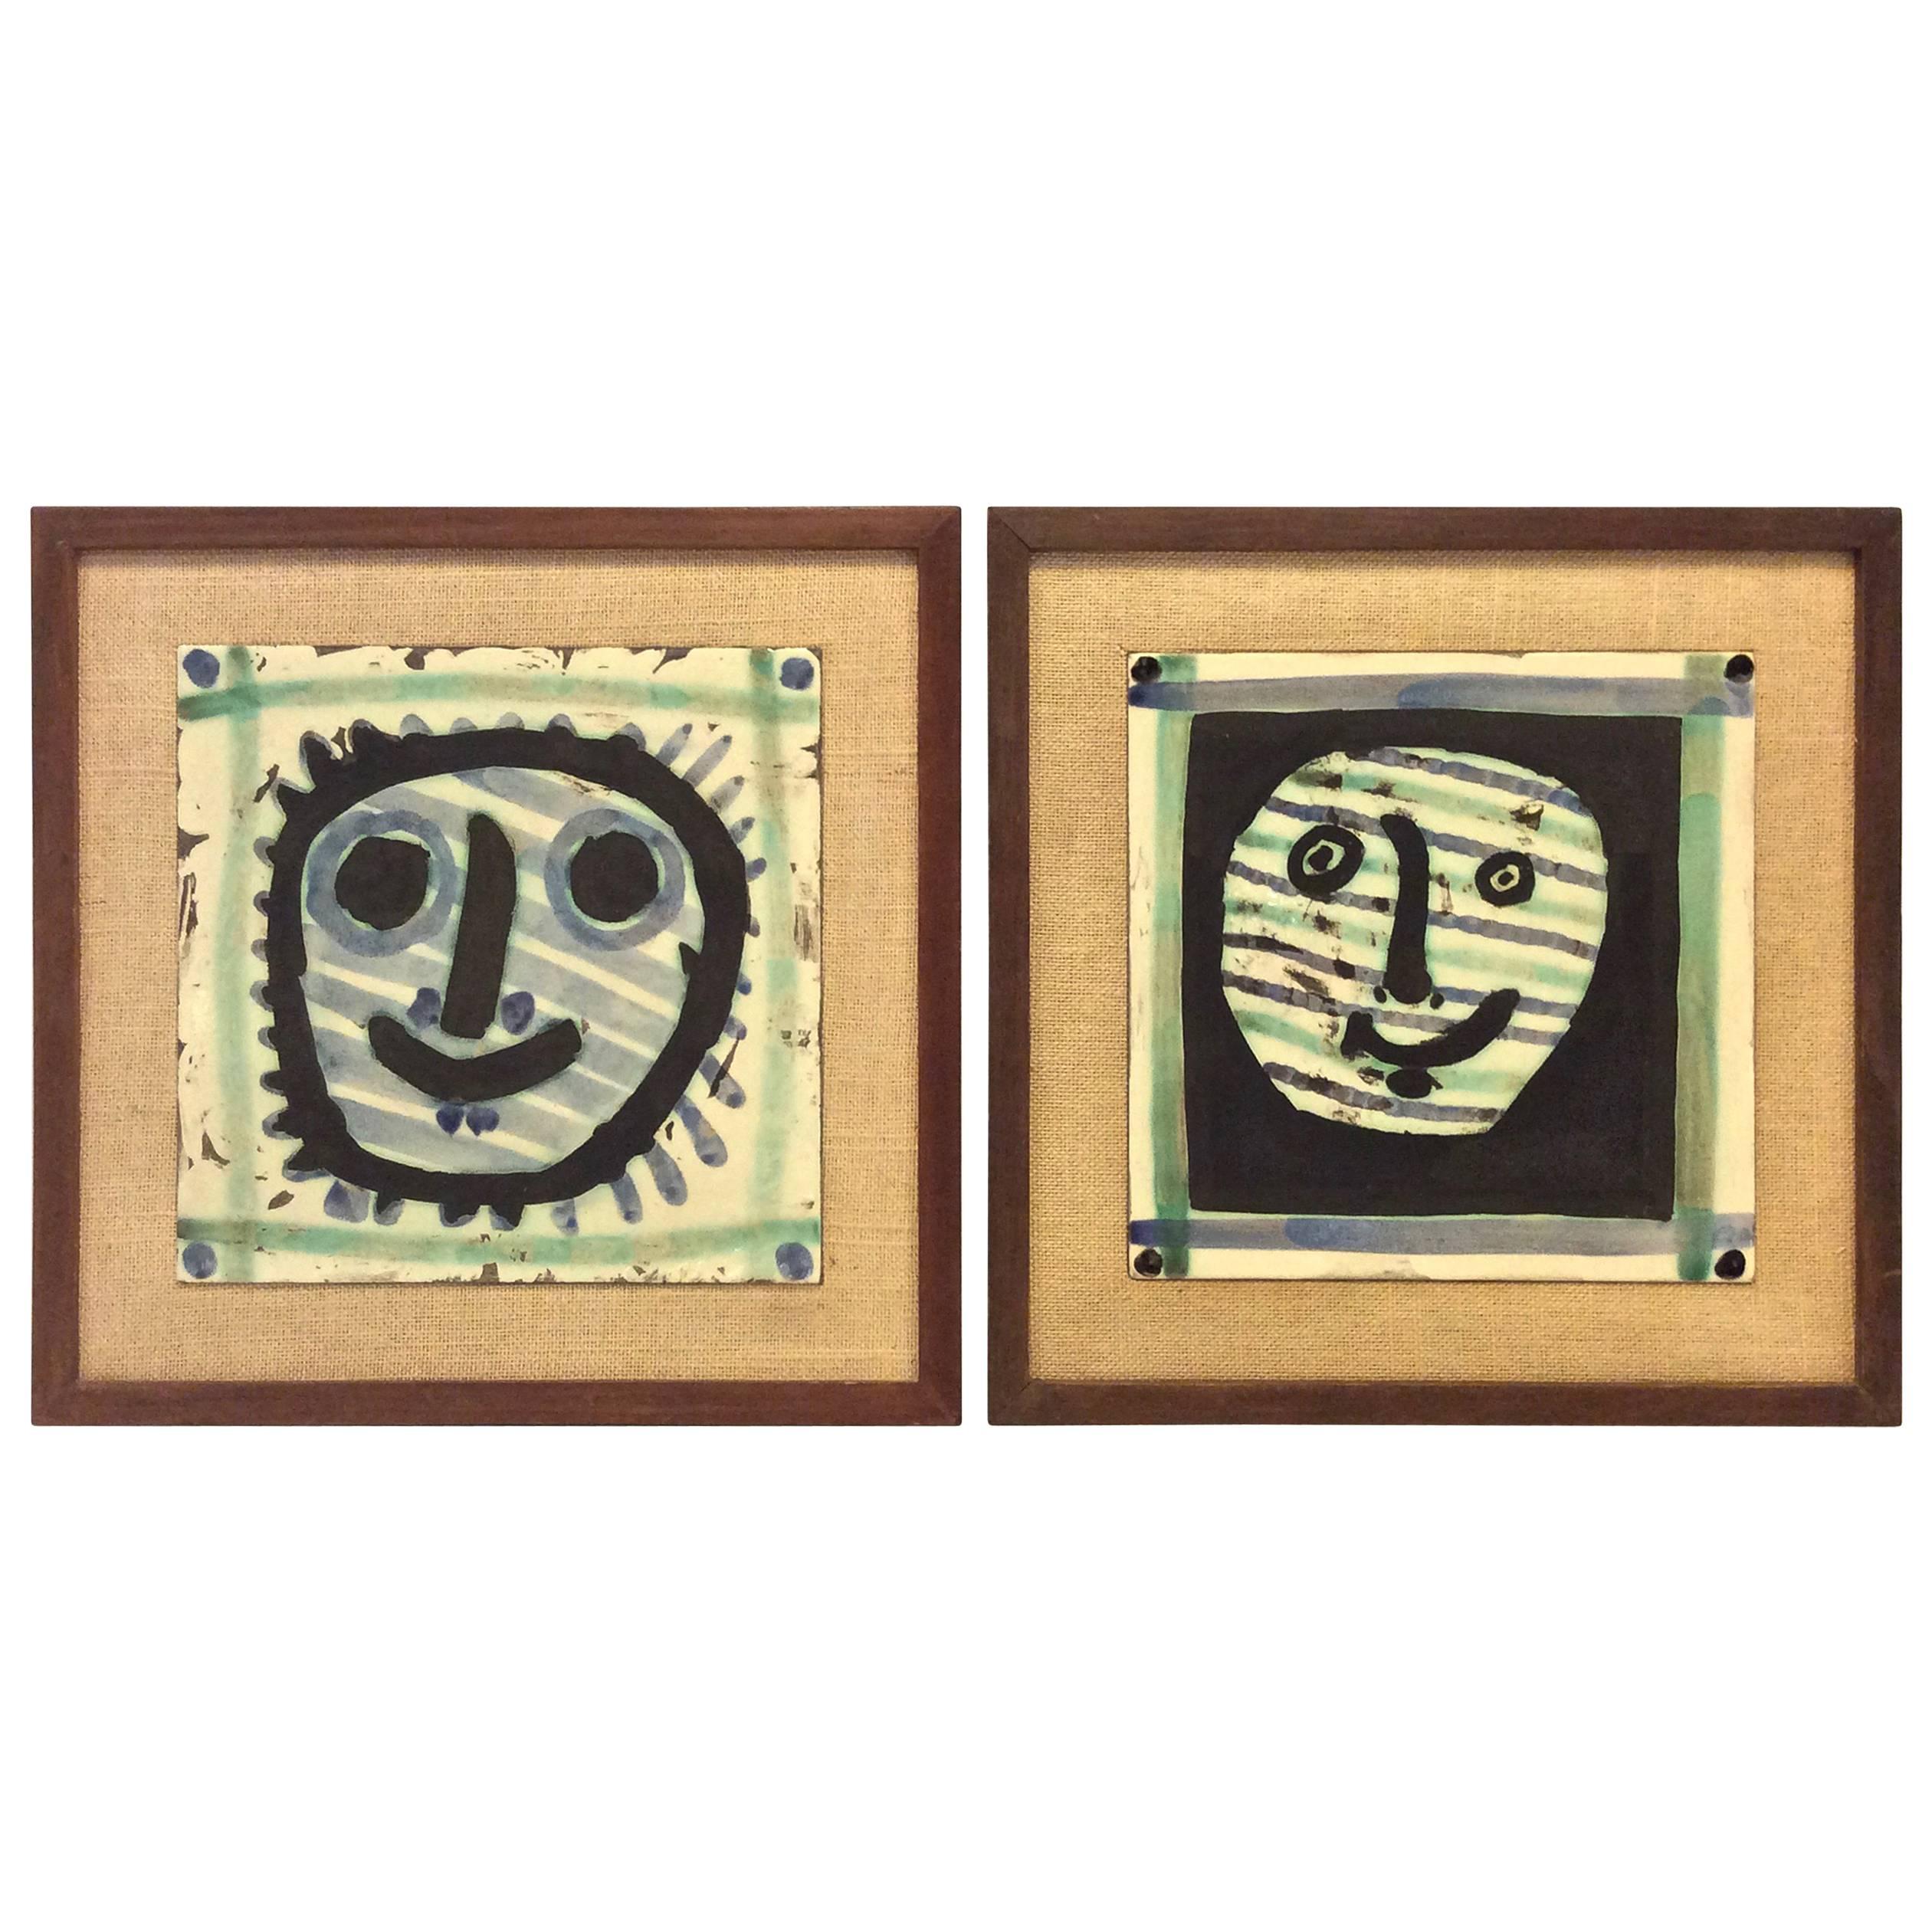 Pablo Picasso Madoura Ceramic Tiles, Rare Numbered Edition